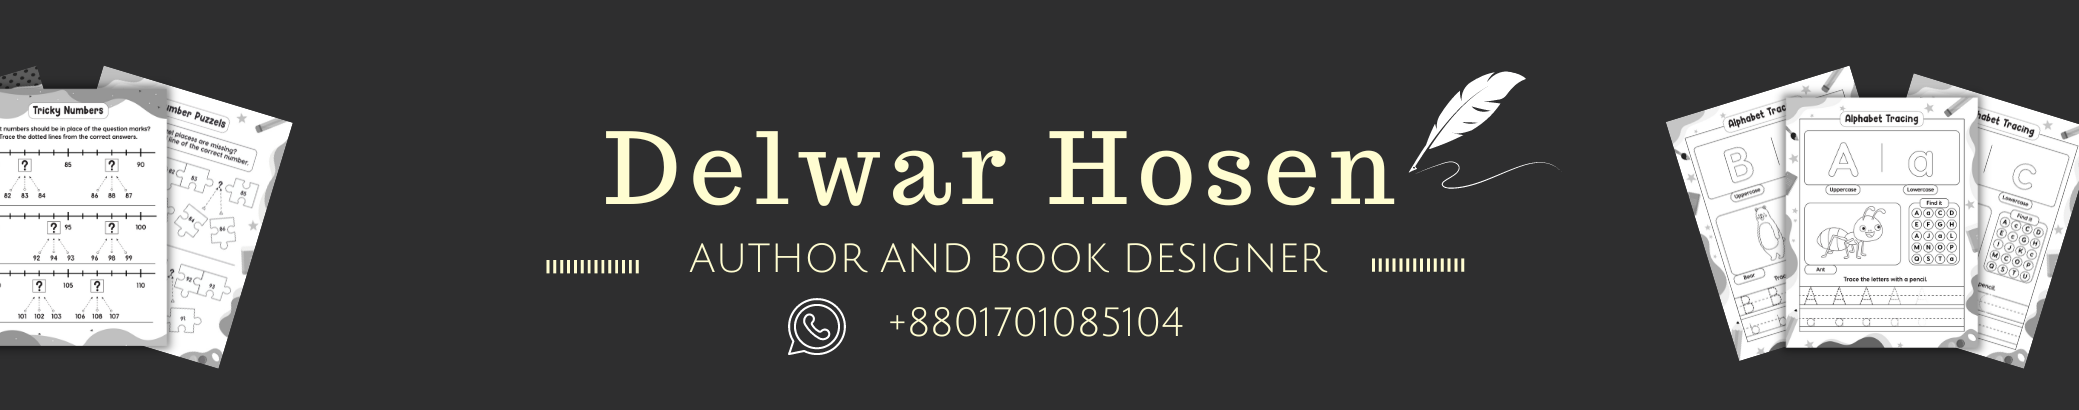 Delwar Hosen's profile banner